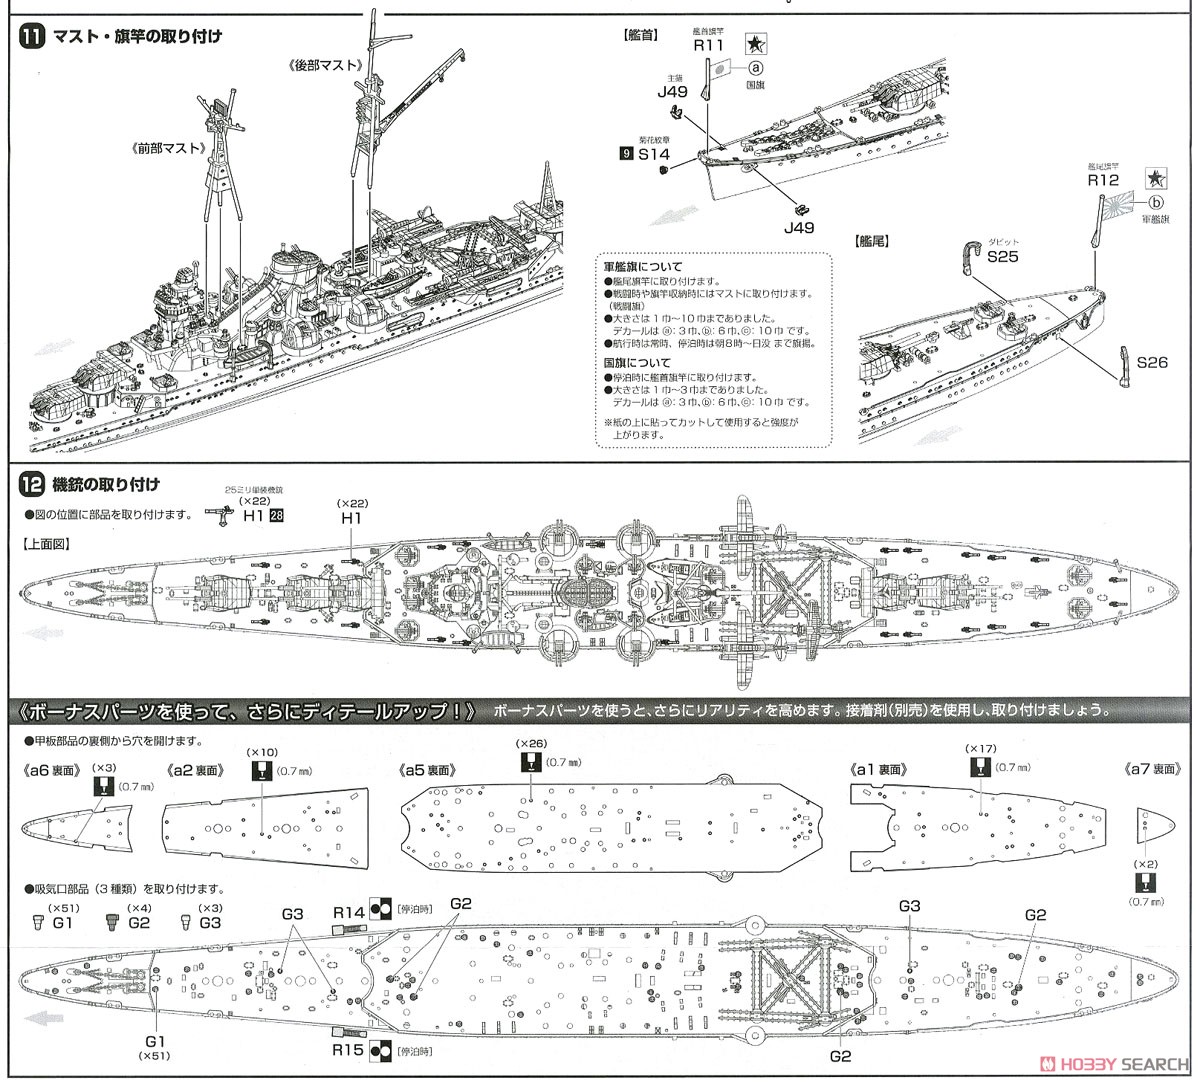 日本海軍重巡洋艦 鈴谷 (昭和19年/捷一号作戦) (プラモデル) 設計図5